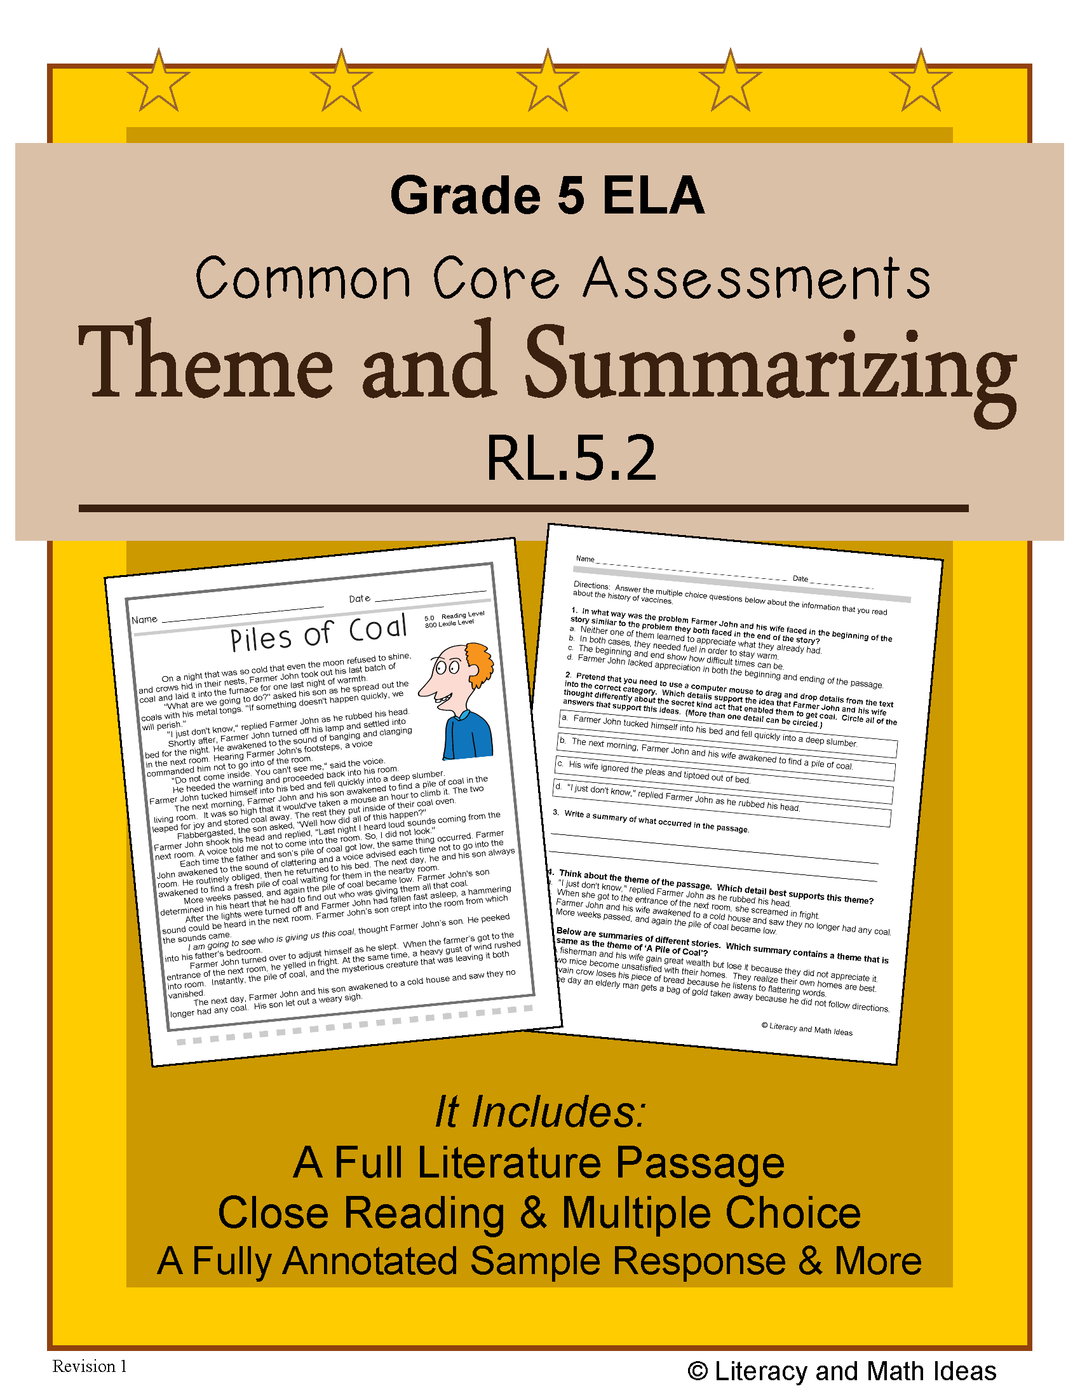 Grade 5 Common Core Assessments: Theme and Summarizing RL.5.2